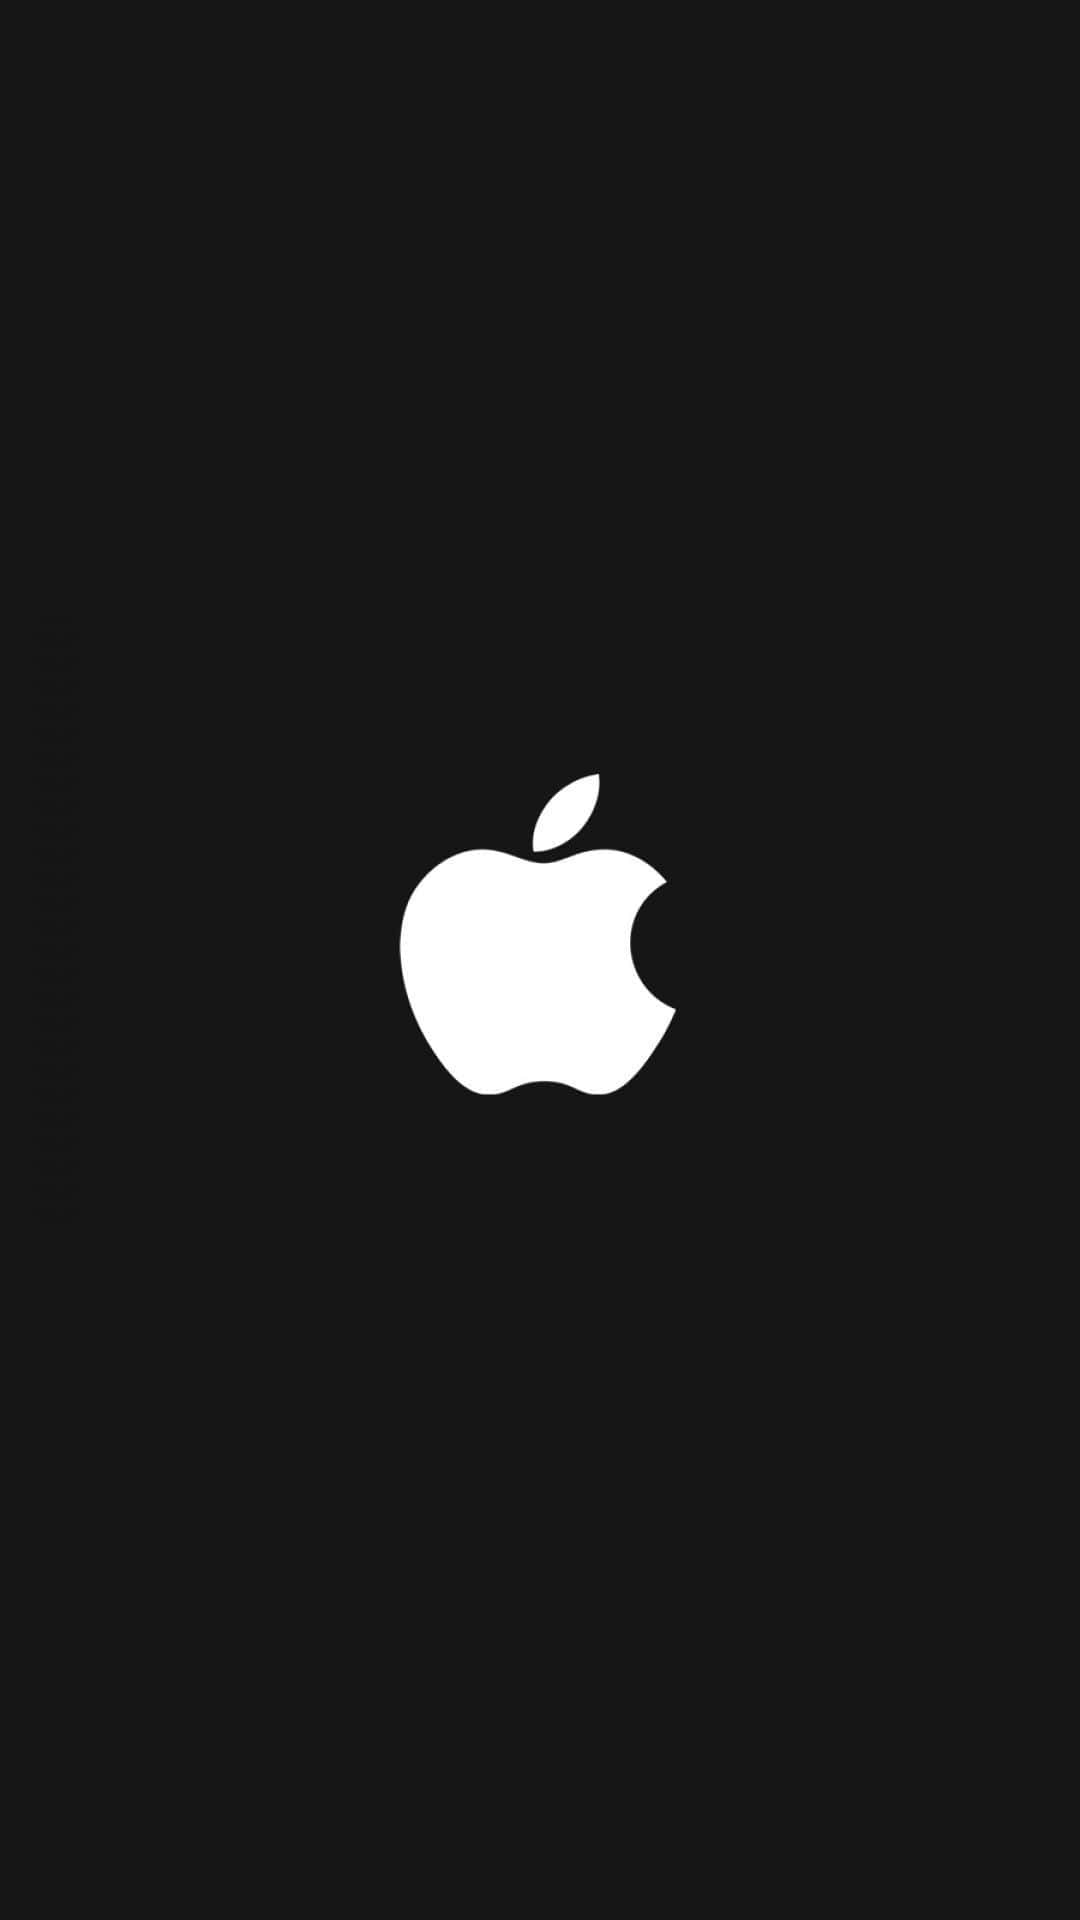 Minimalist Iphone X Apple Background